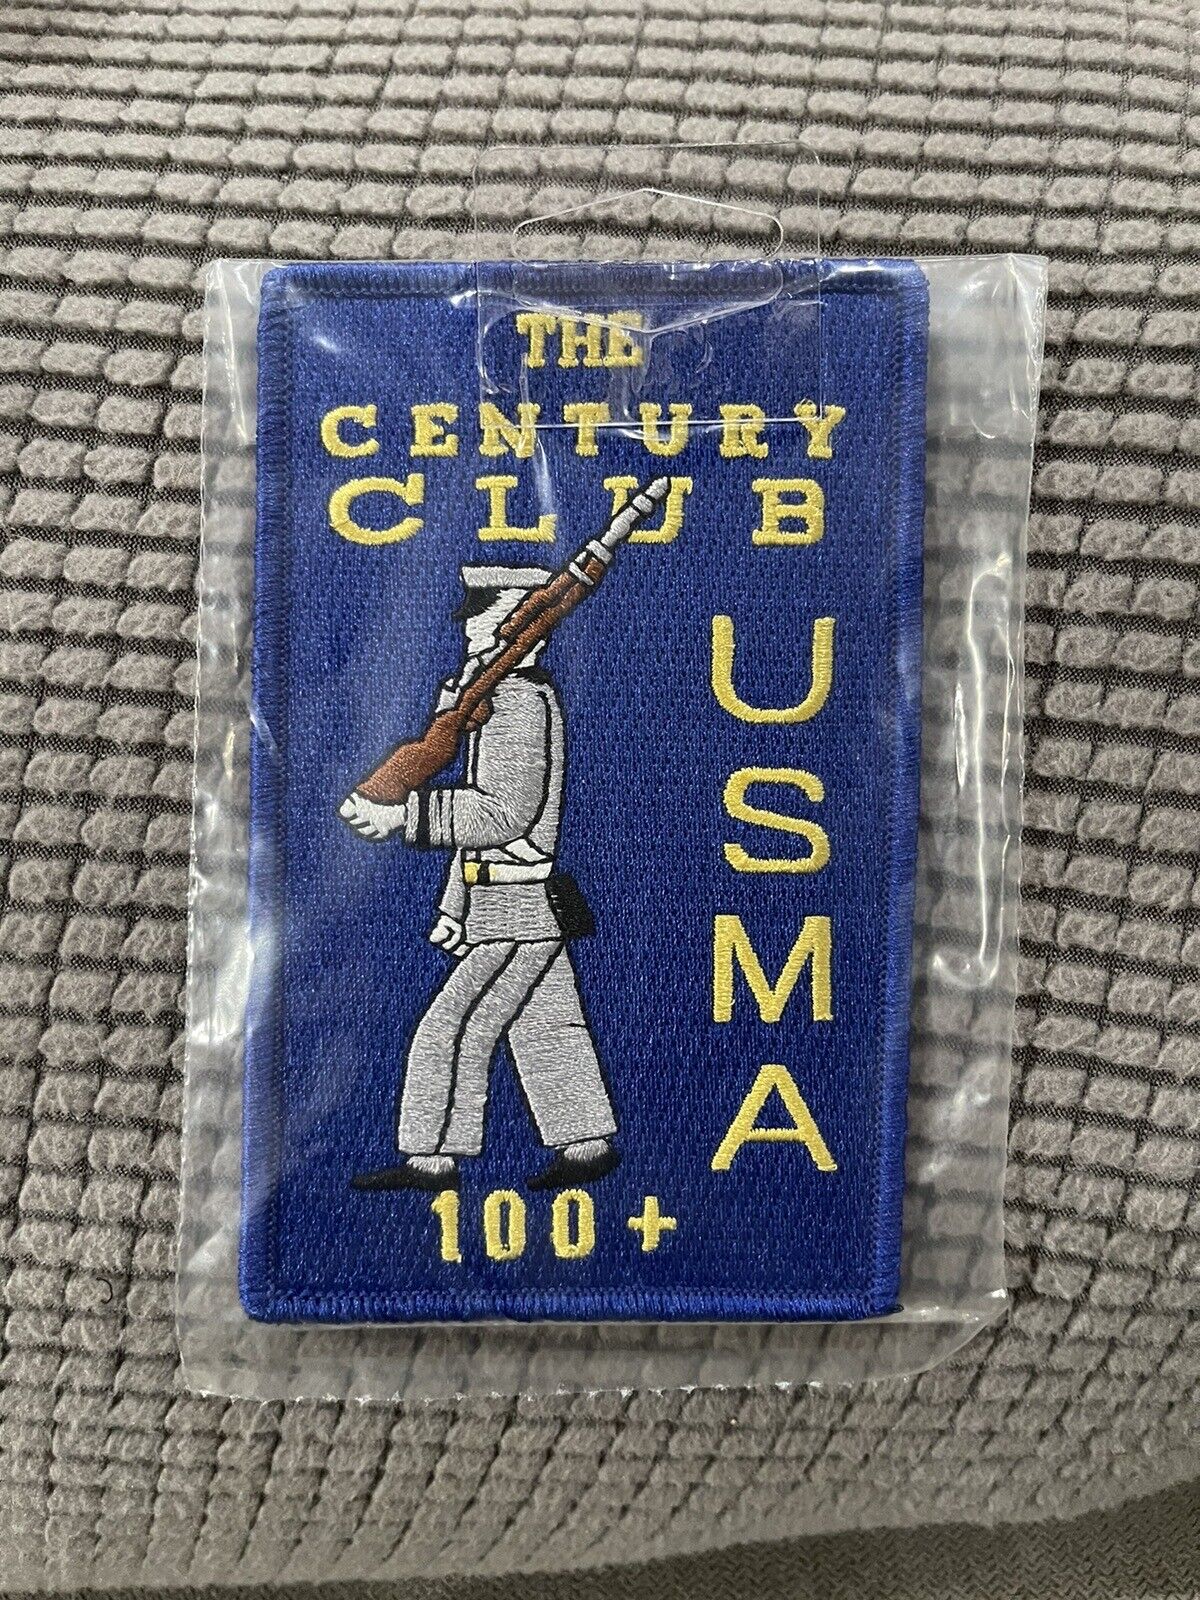 USMA West Point Cadet Army Military Century Club 100+ Patch